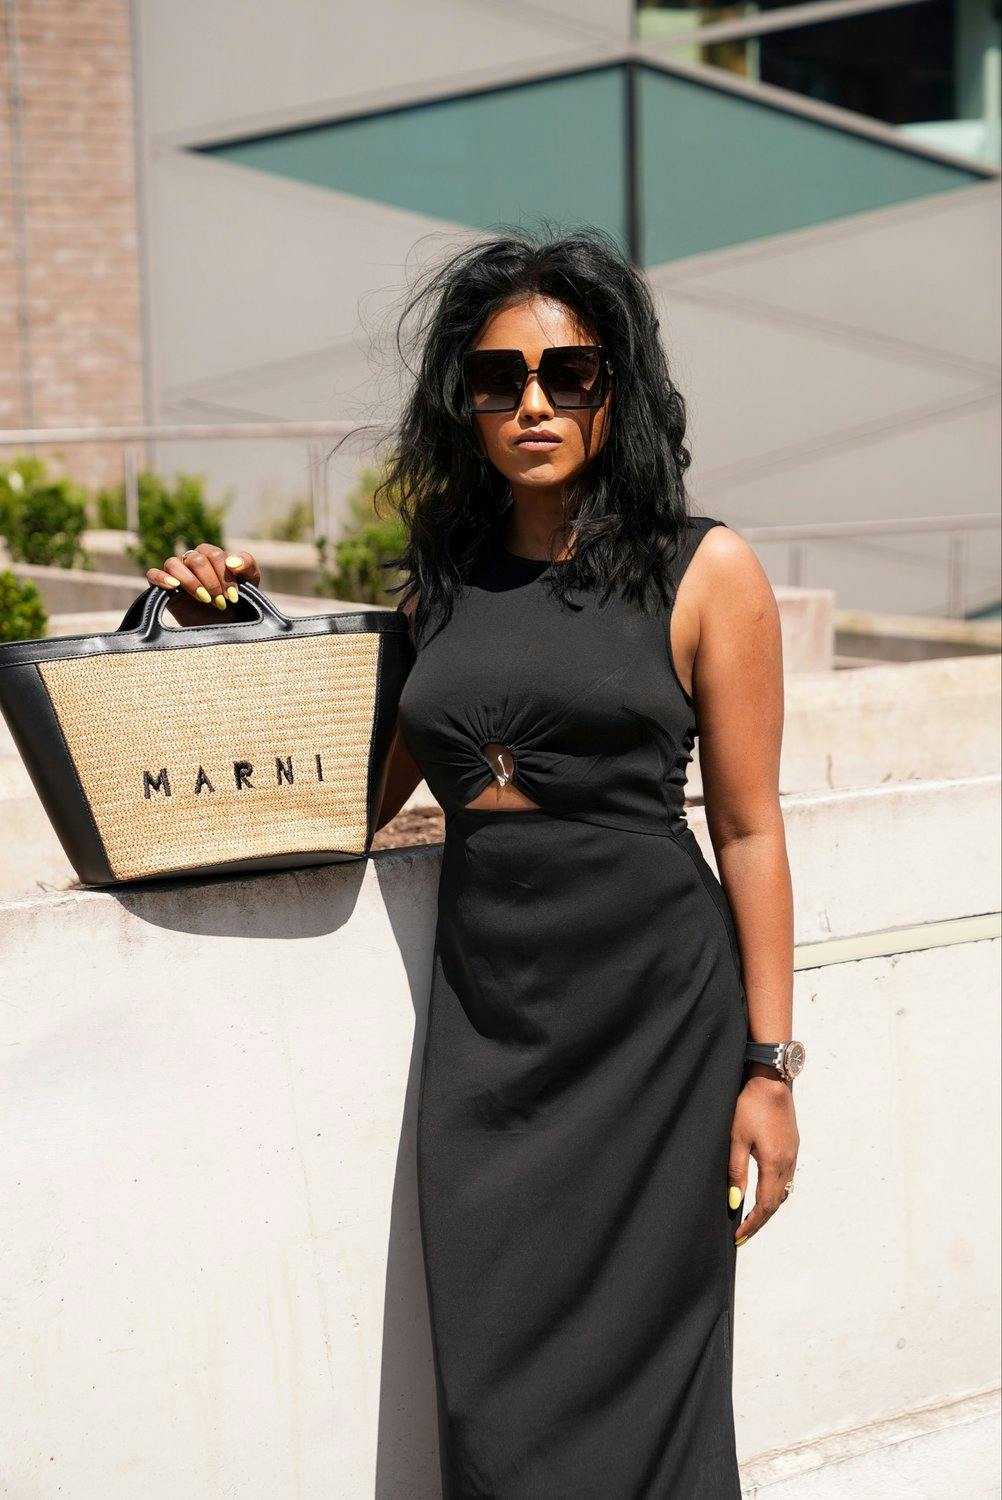 Sachini Dilanka wearing a Black Dress and a Marni bag